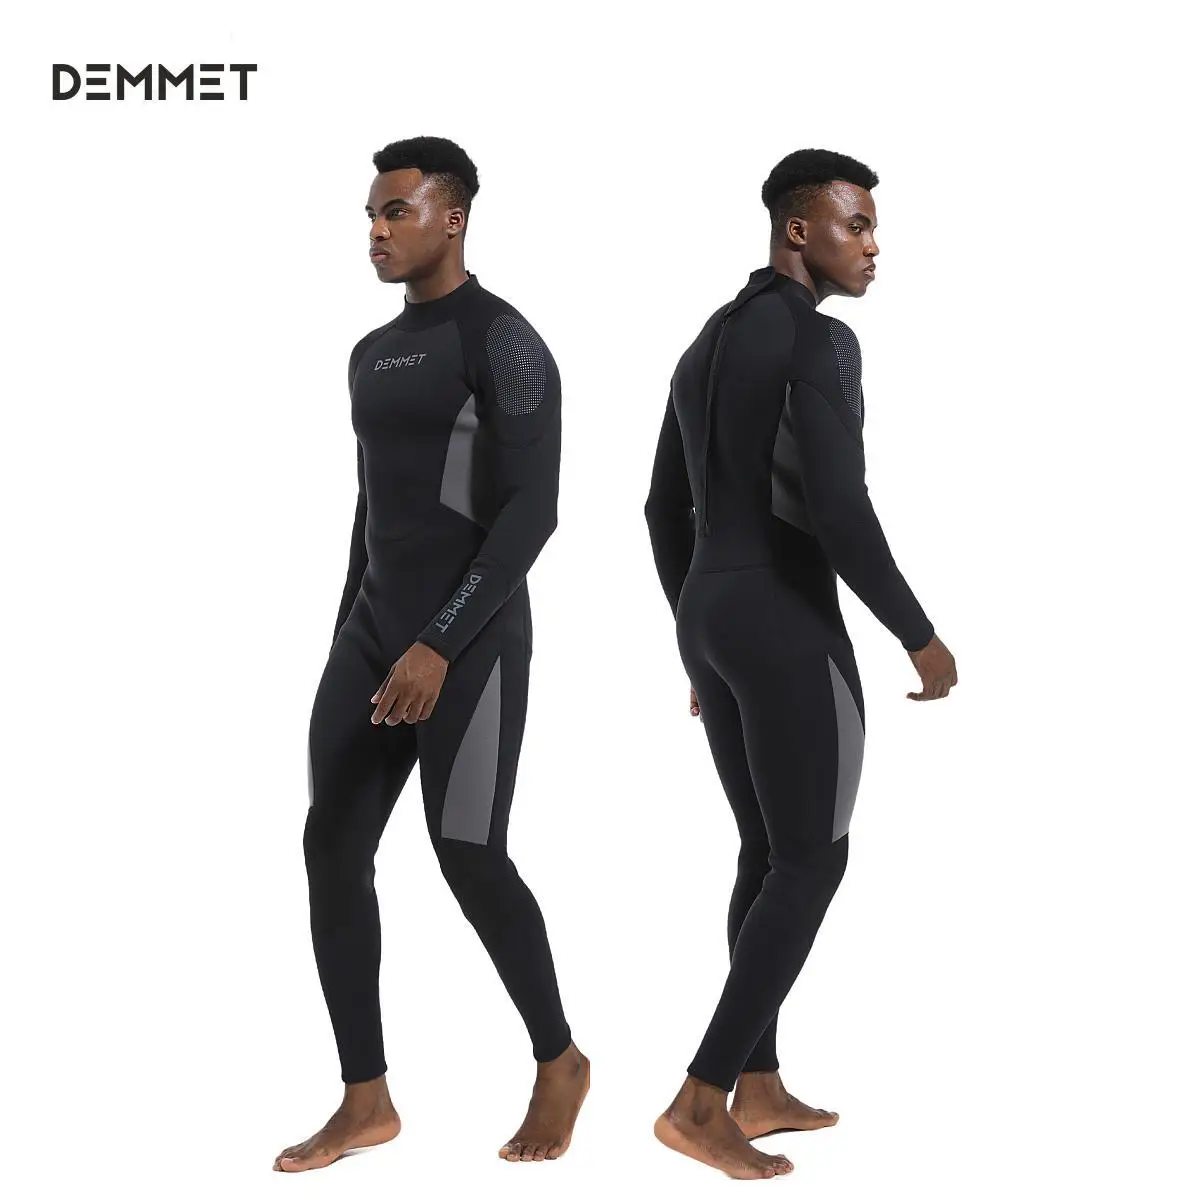 hot-15mm-men's-long-wetsuit-scr-neoprene-material-warm-fleece-lining-outdoor-swimming-kayaking-surfing-drifting-wetsuit-4xl